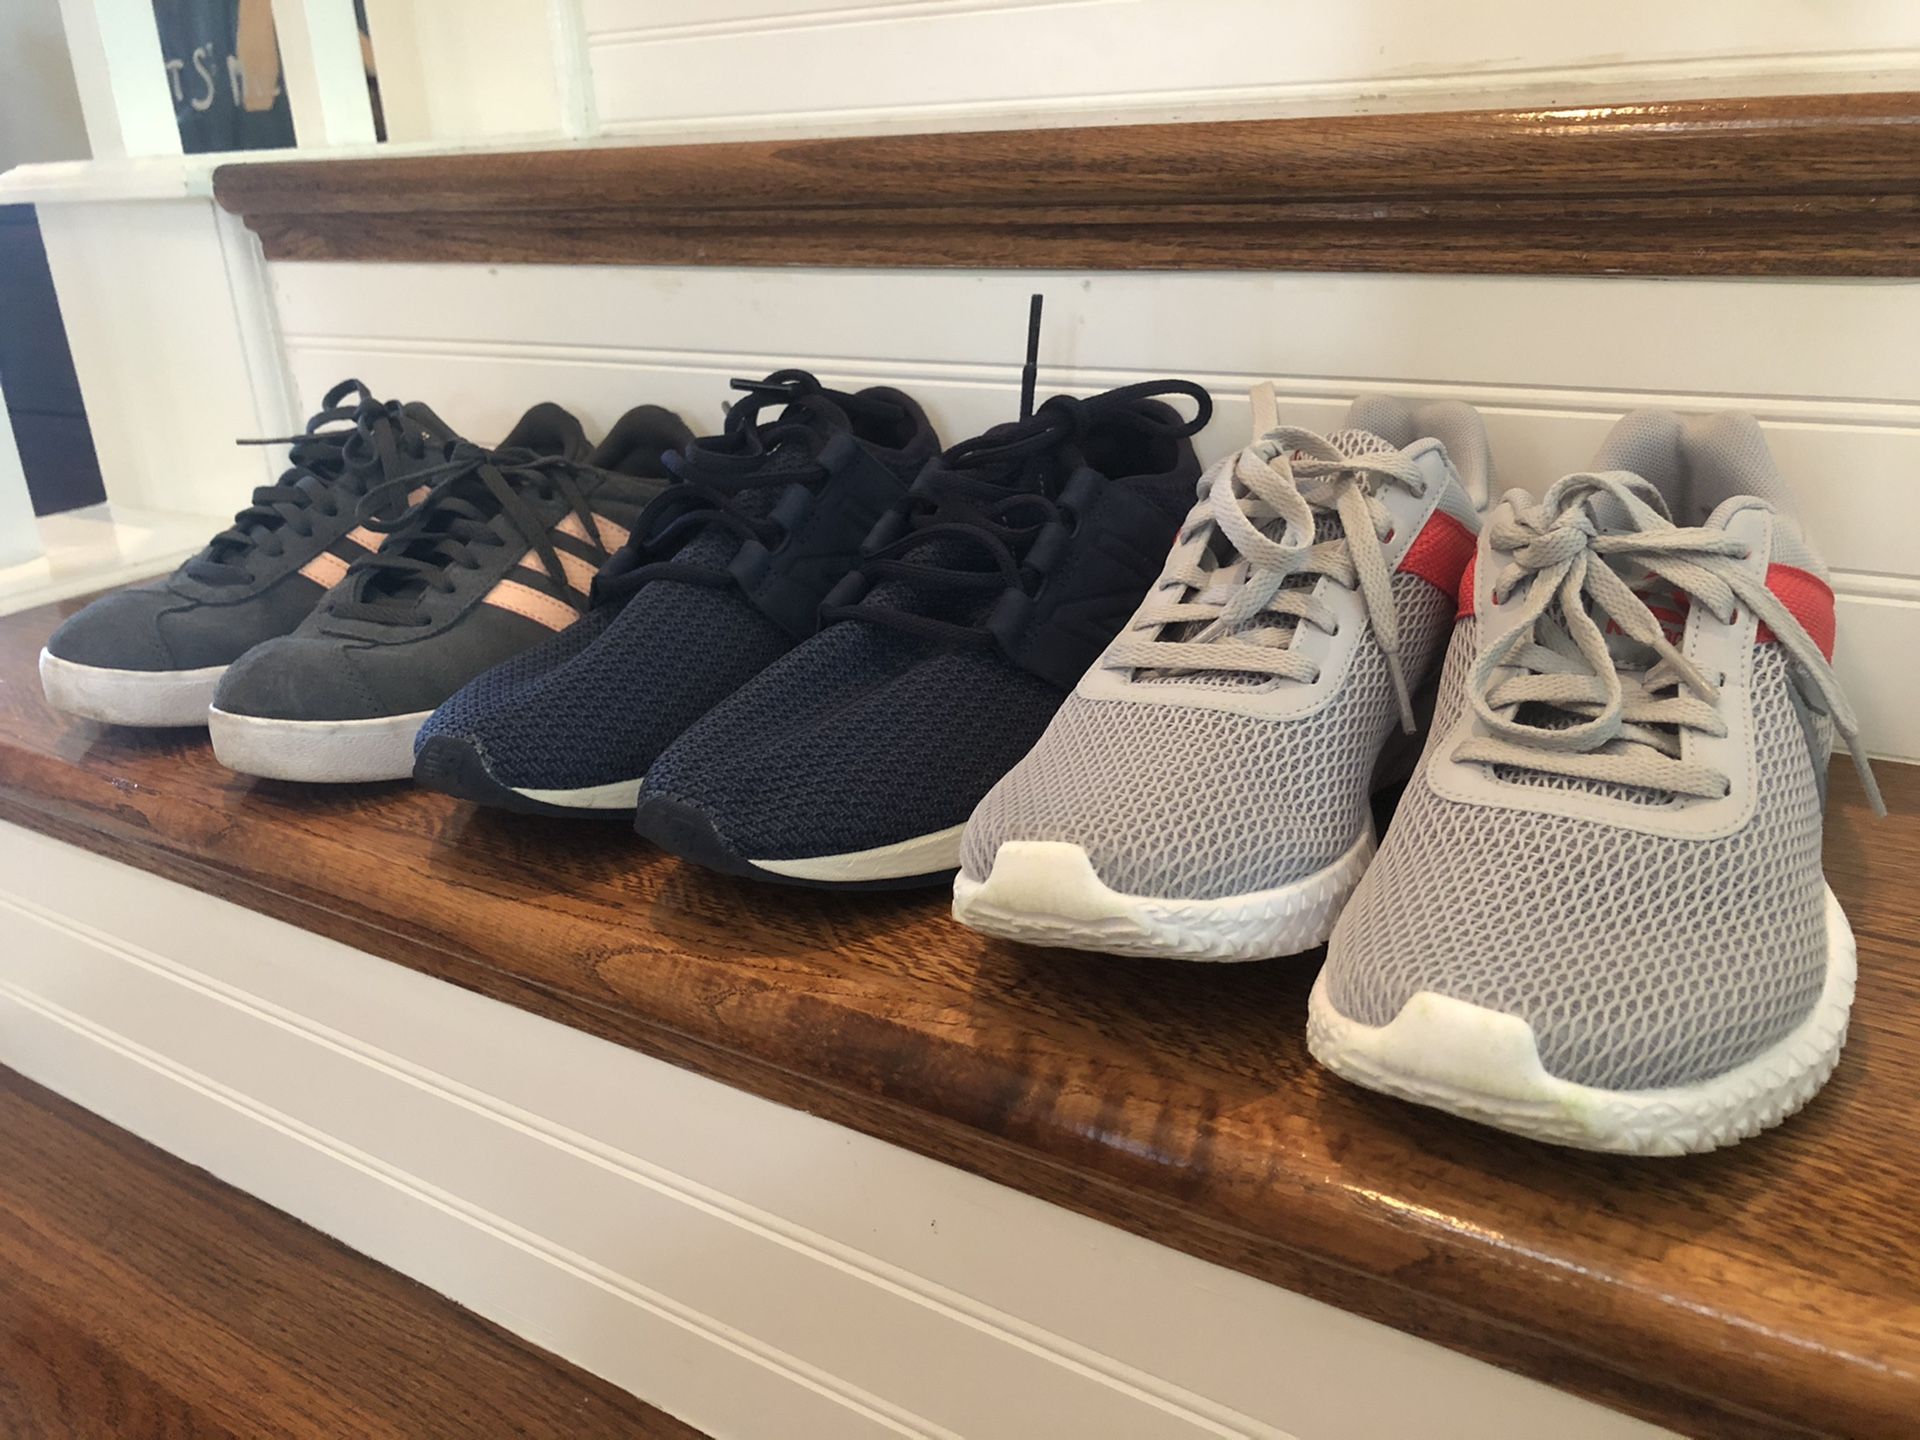 Sneakers - Adidas, Reebok, New Balance